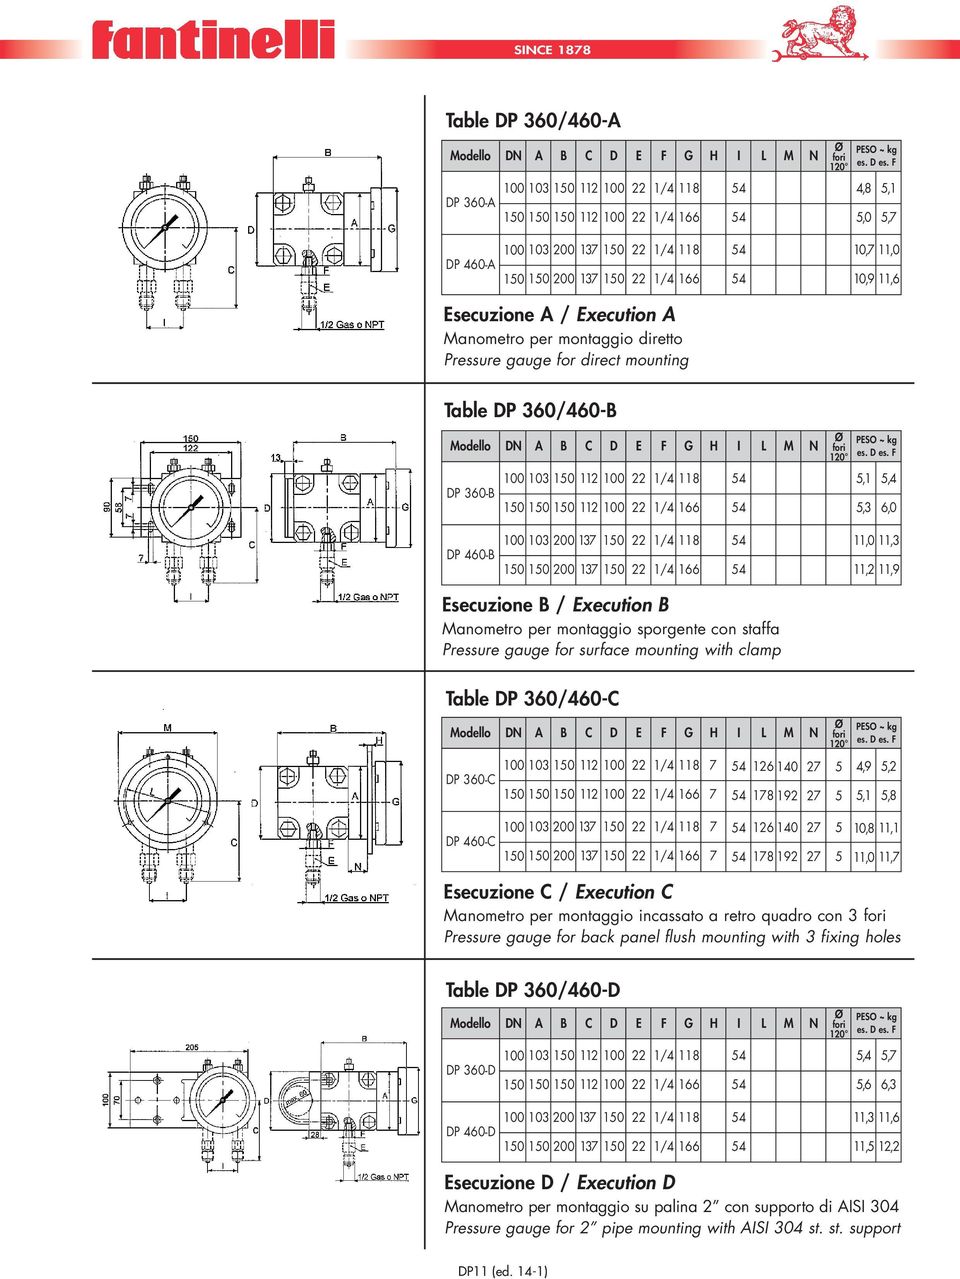 Pressure gauge for direct mounting Table DP 360/460-B Modello DN A B C D E F G H I L M N Ø fori 120 PESO ~ kg es. D es.